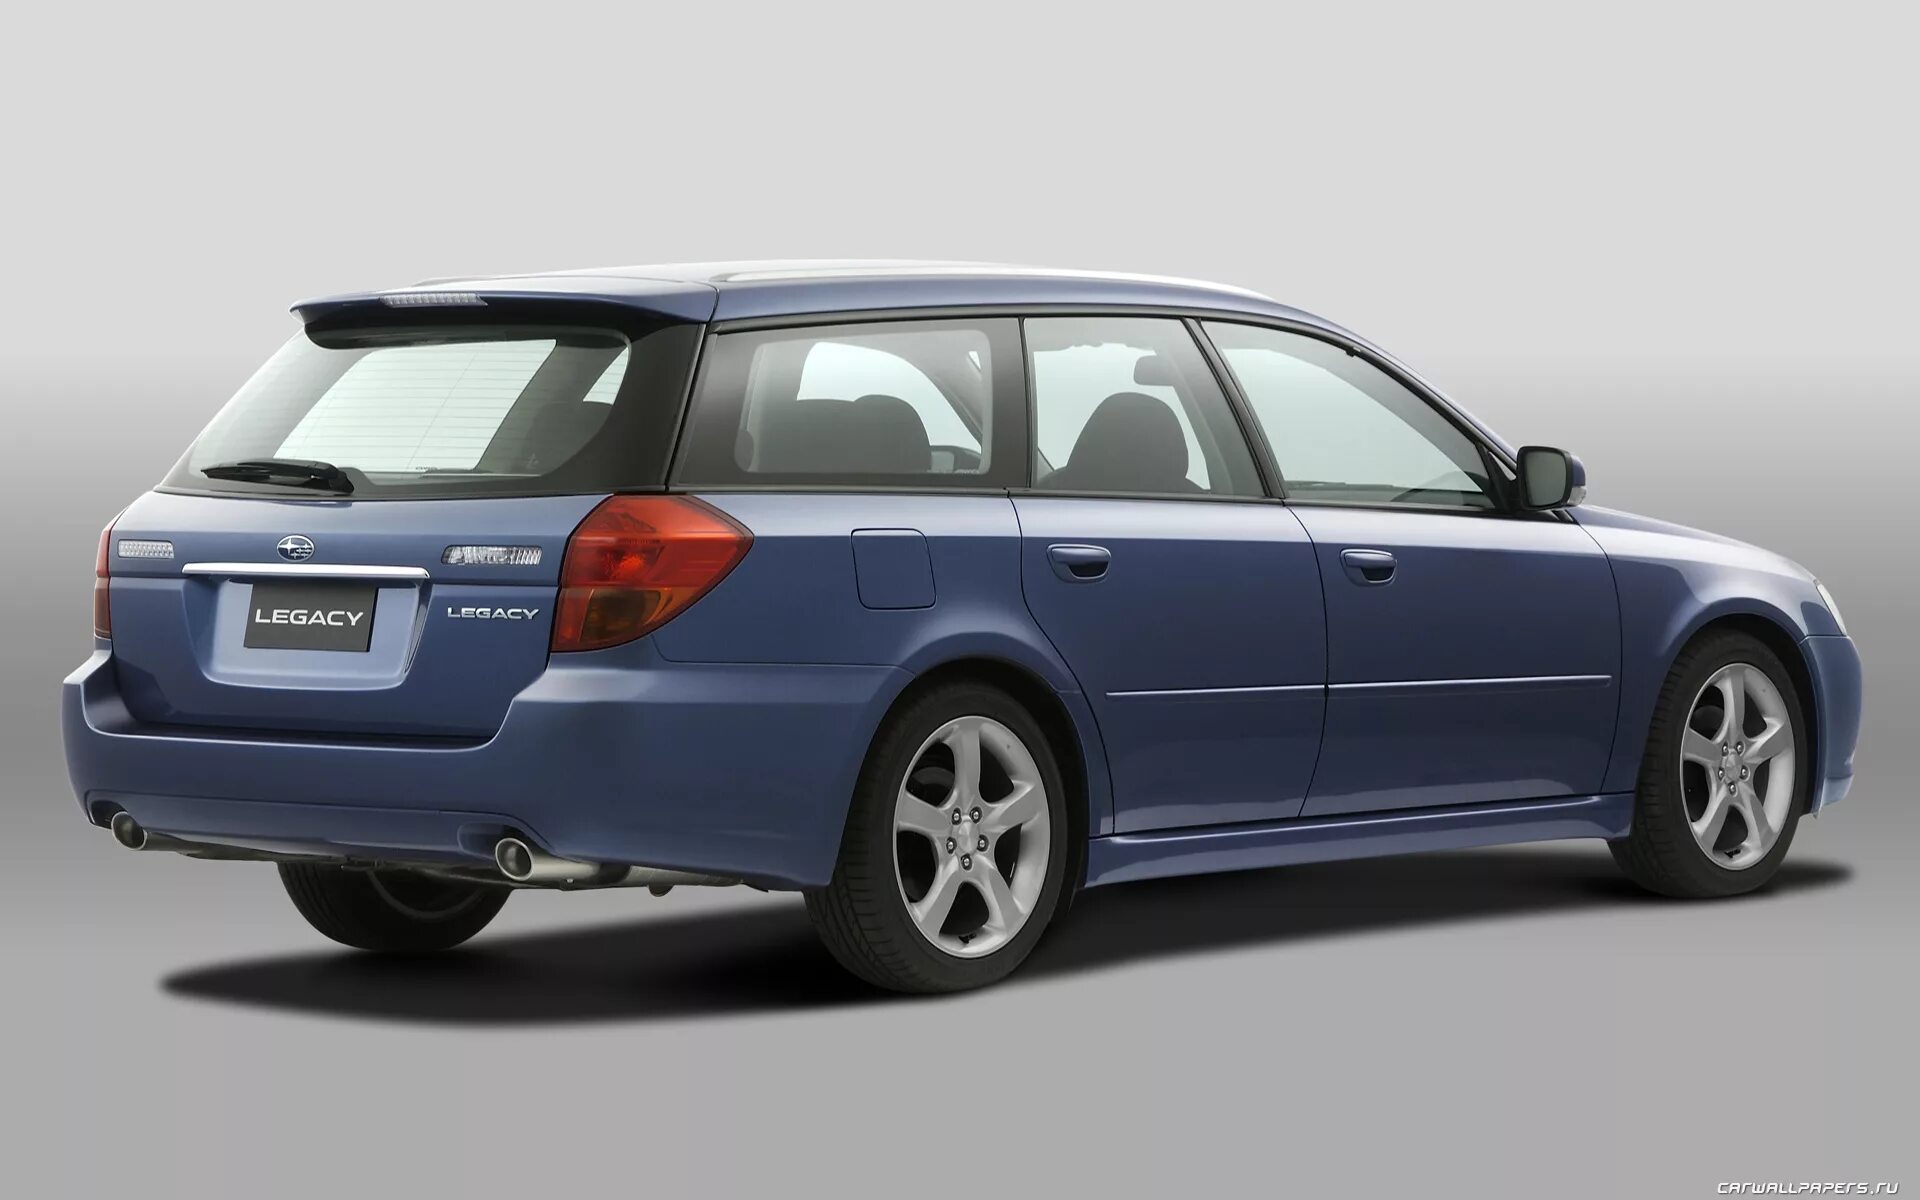 Subaru legacy 2003. Subaru Legacy 2004 универсал. Subaru Legacy Wagon 2004. Субару Легаси 2003 универсал 2.5. Субару Легаси 2003 универсал.